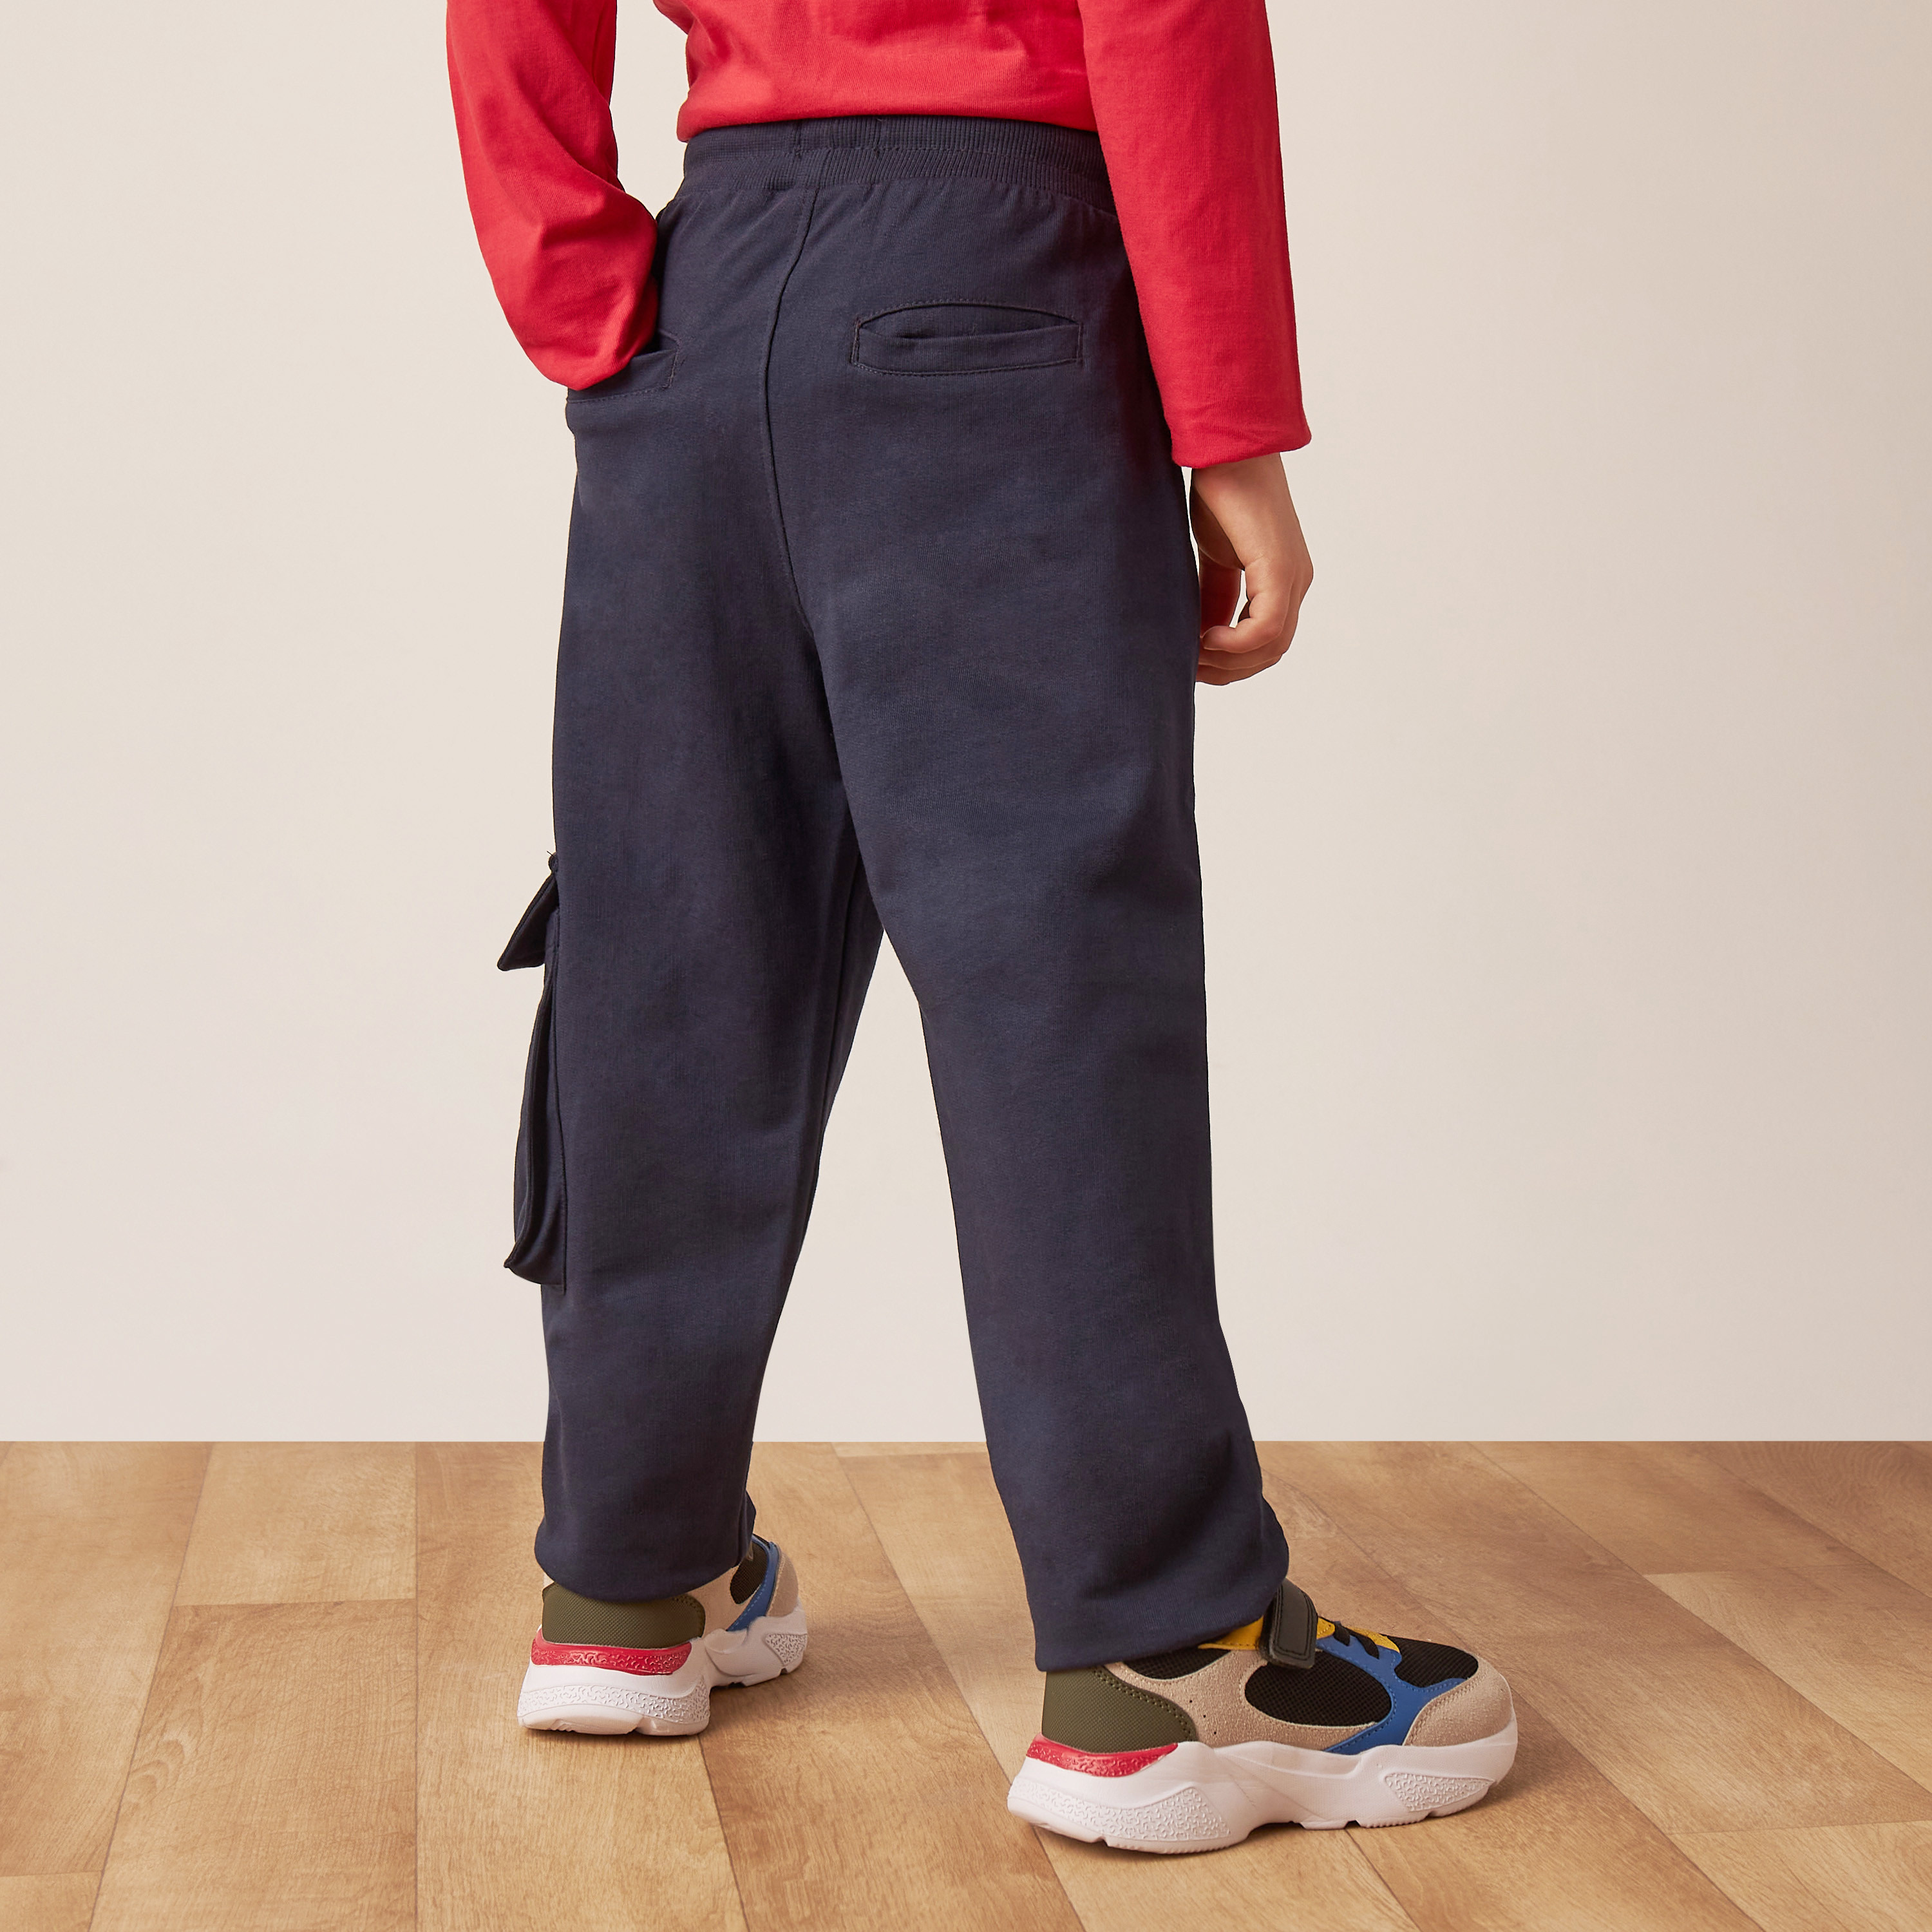 Lee Cooper Boys Brown Cargo Trousers Size 9-10 Years – Preworn Ltd